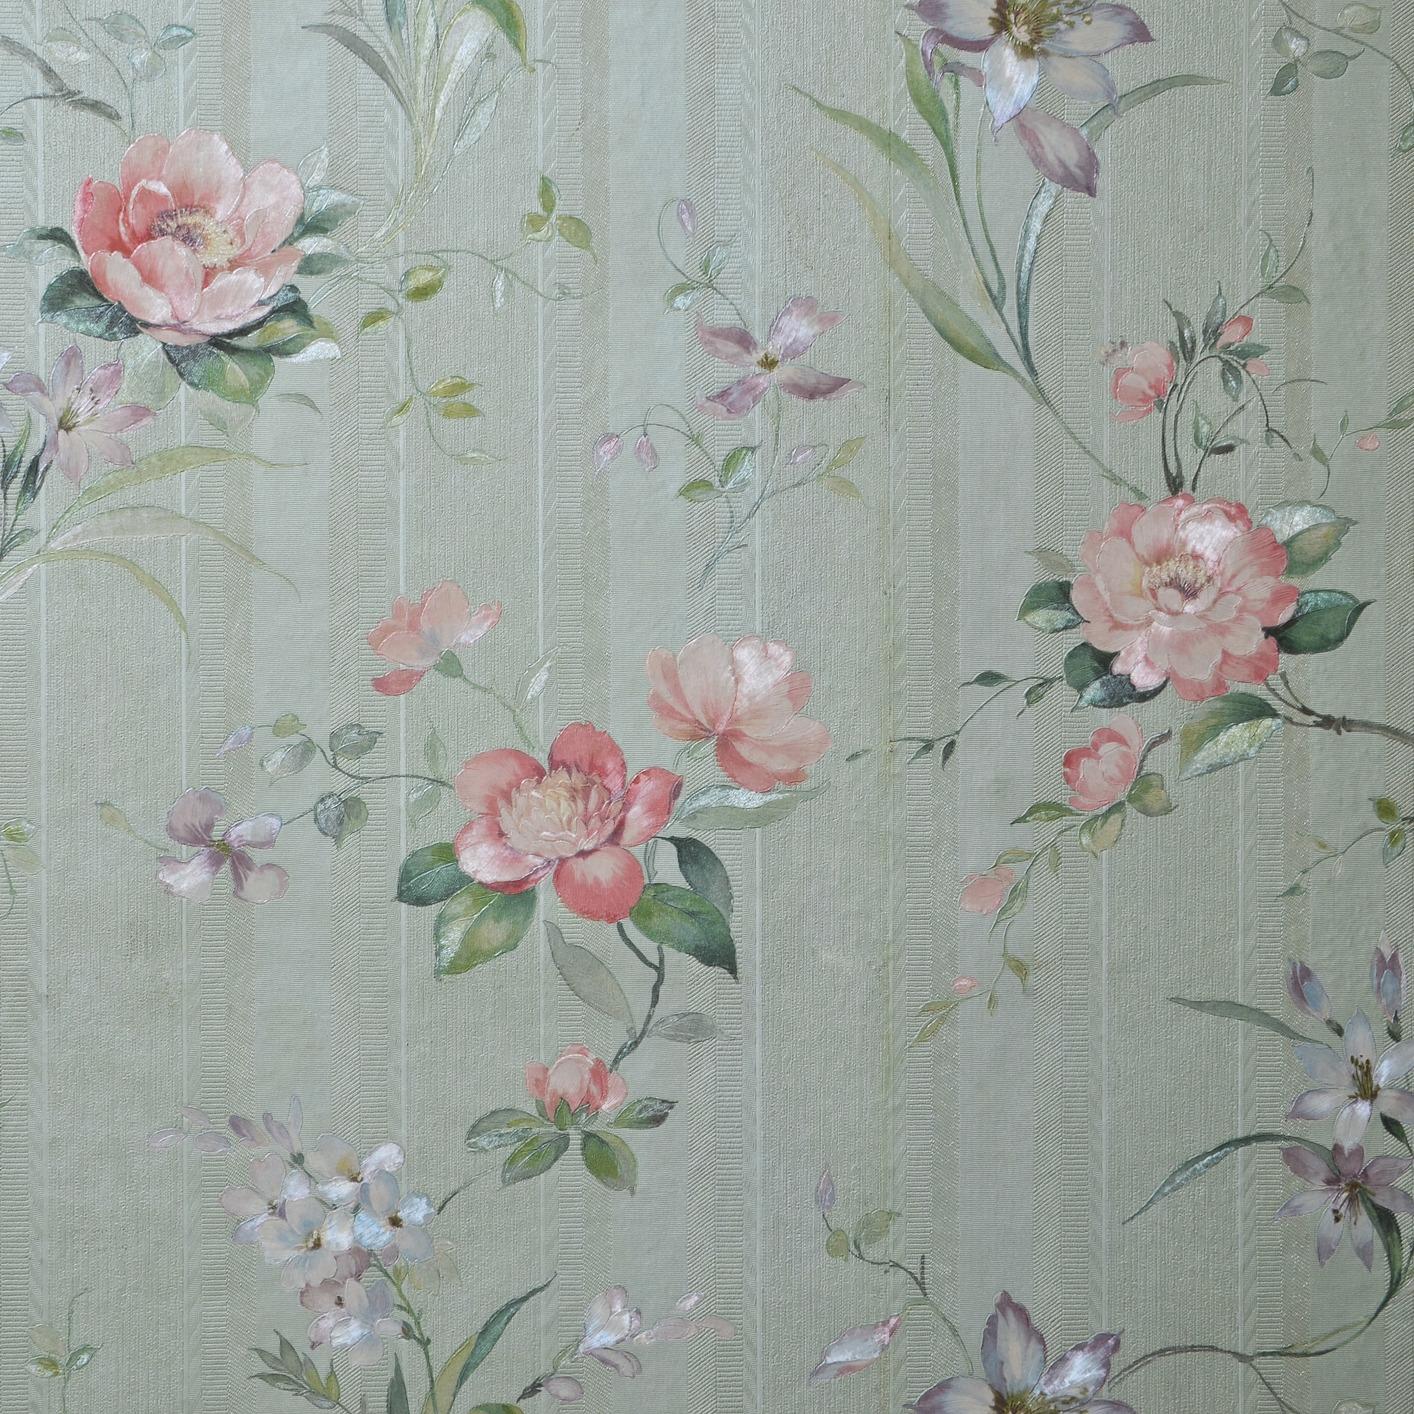 [46+] Victorian Flower Wallpaper | WallpaperSafari.com